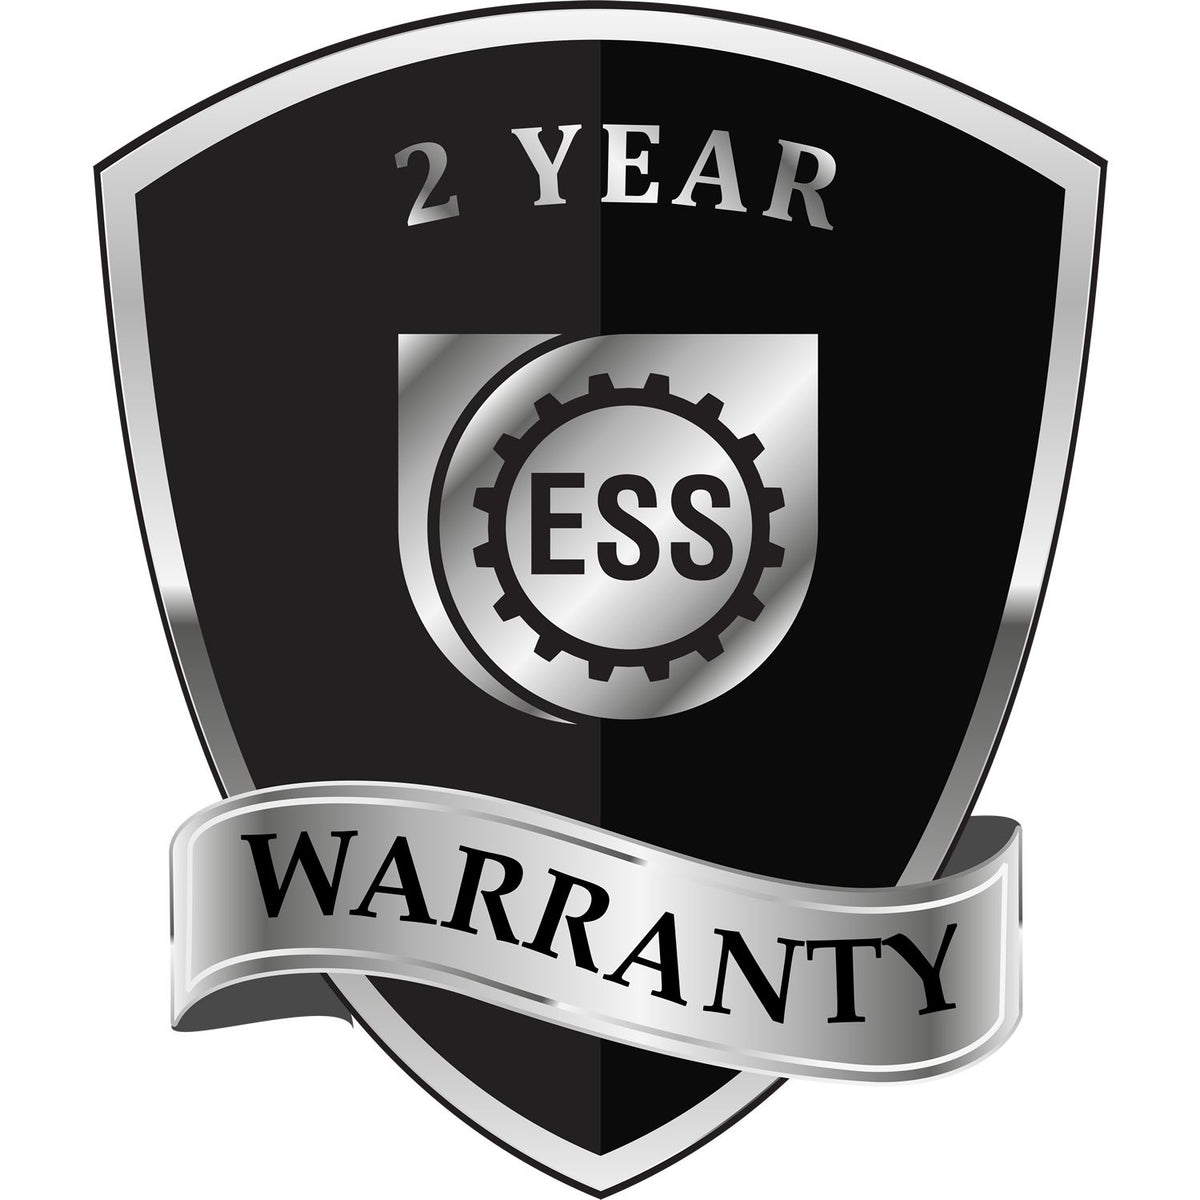 A badge or emblem showing a warranty icon for the Long Reach Nebraska Land Surveyor Seal